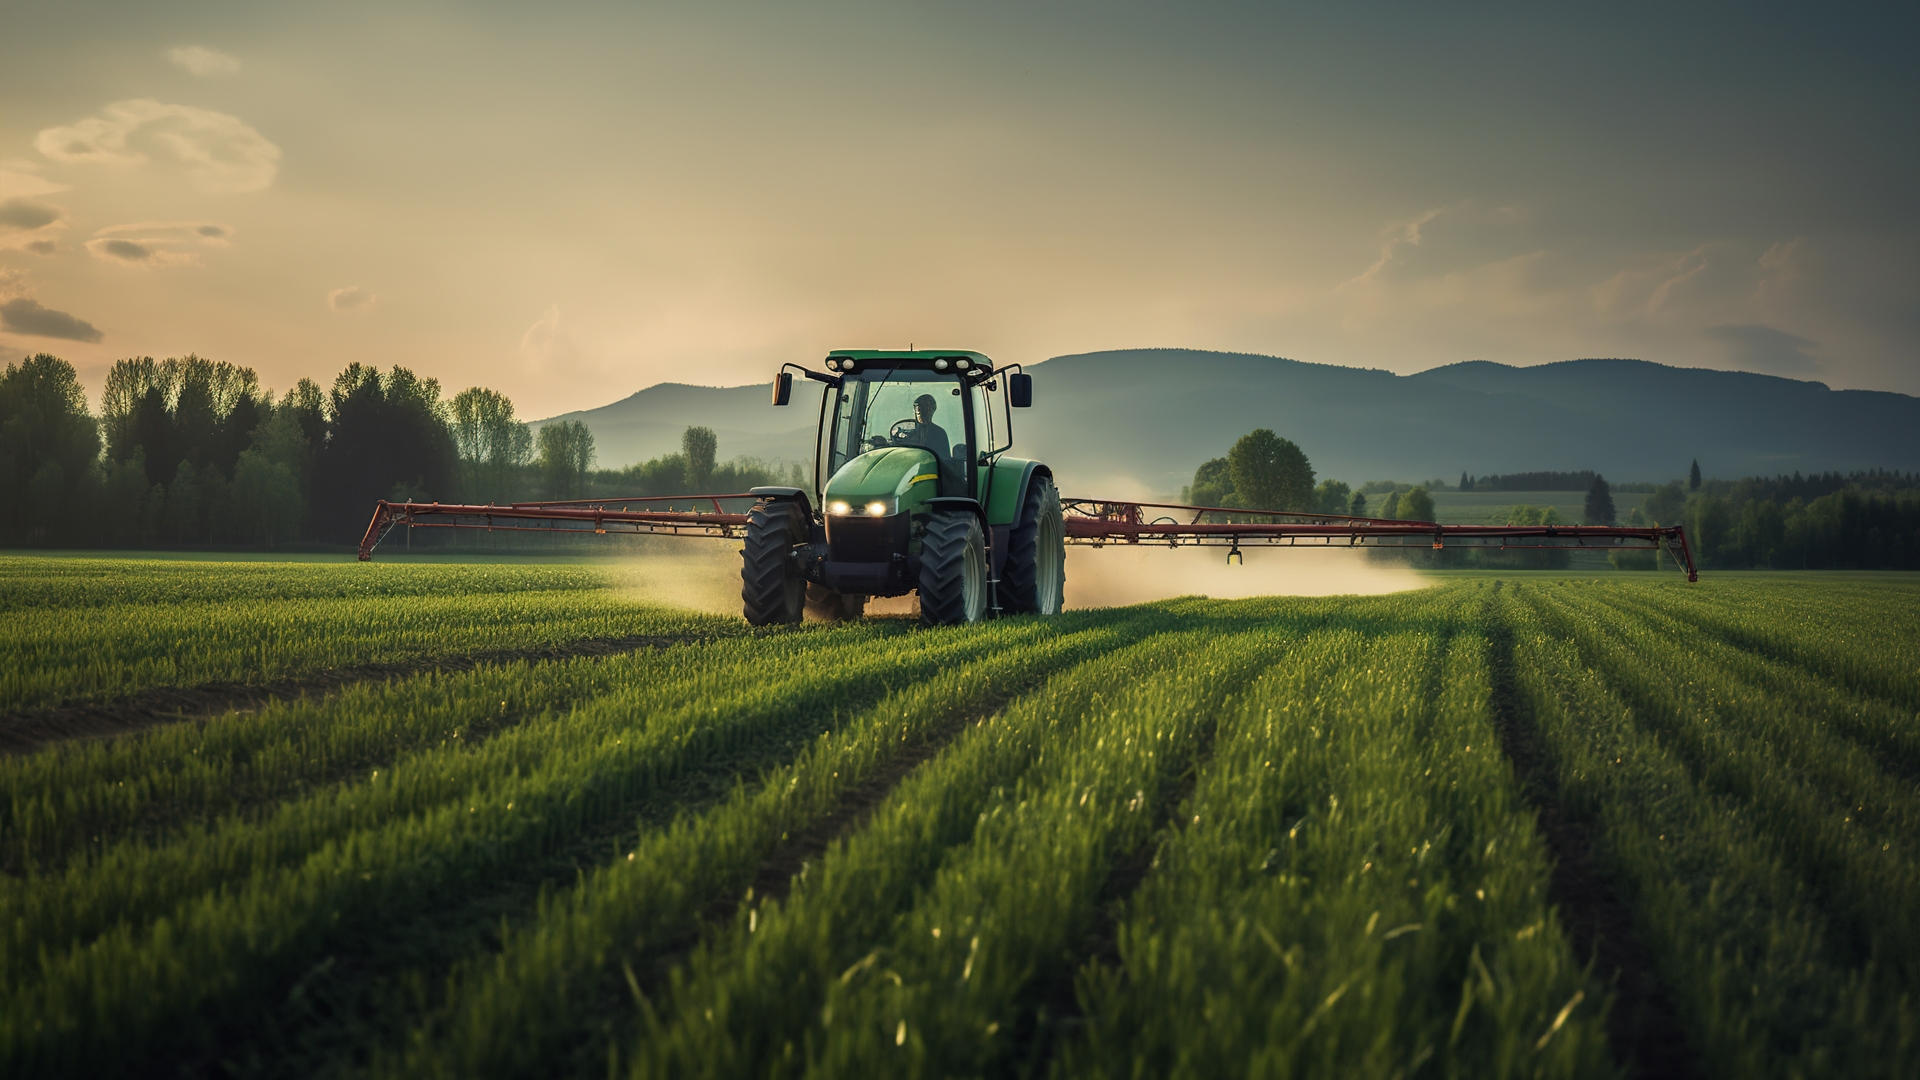 Tractor spraying pesticides fertilizer on soybean crops farm field in spring evening.